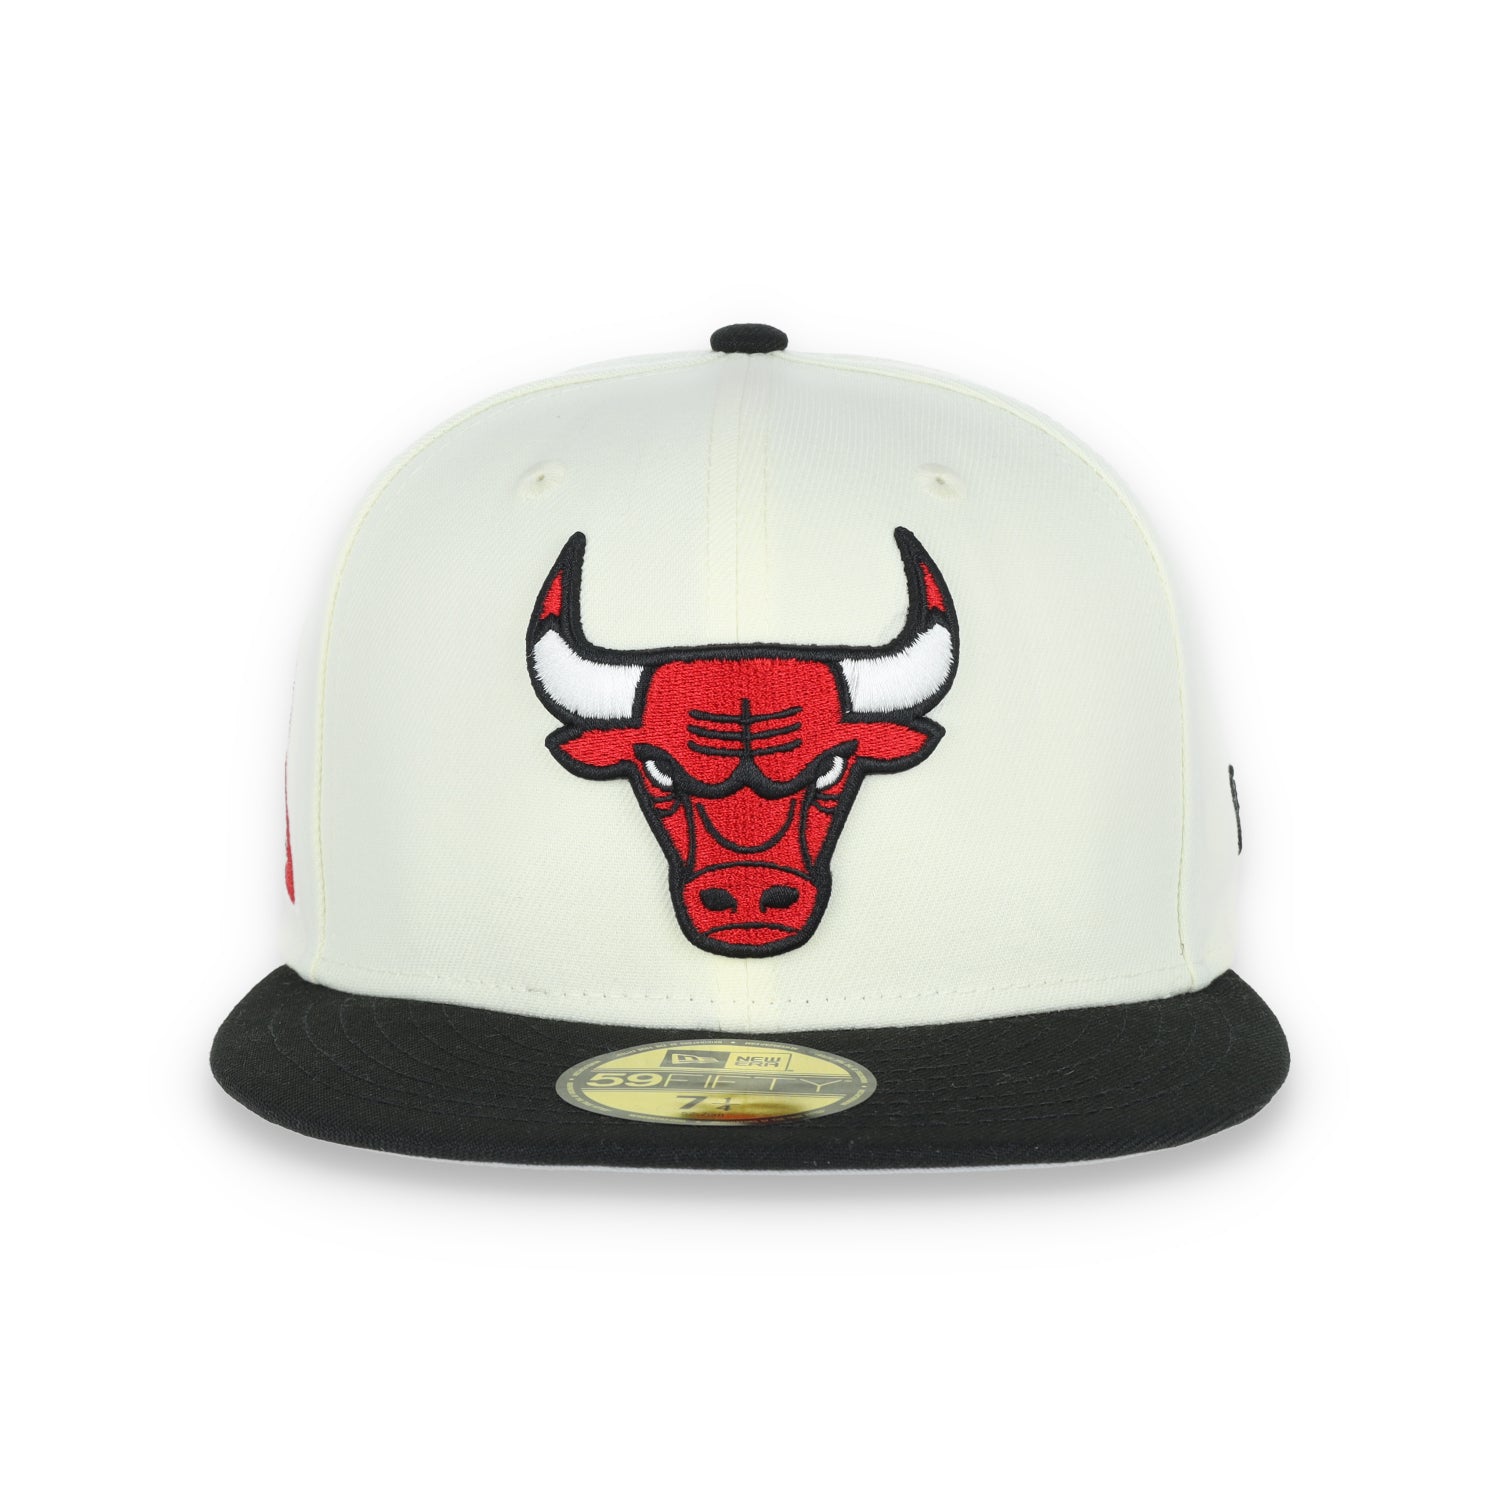 New Era Chicago Bulls Retro E1 59FIFTY Fitted Hat - Cream/Black